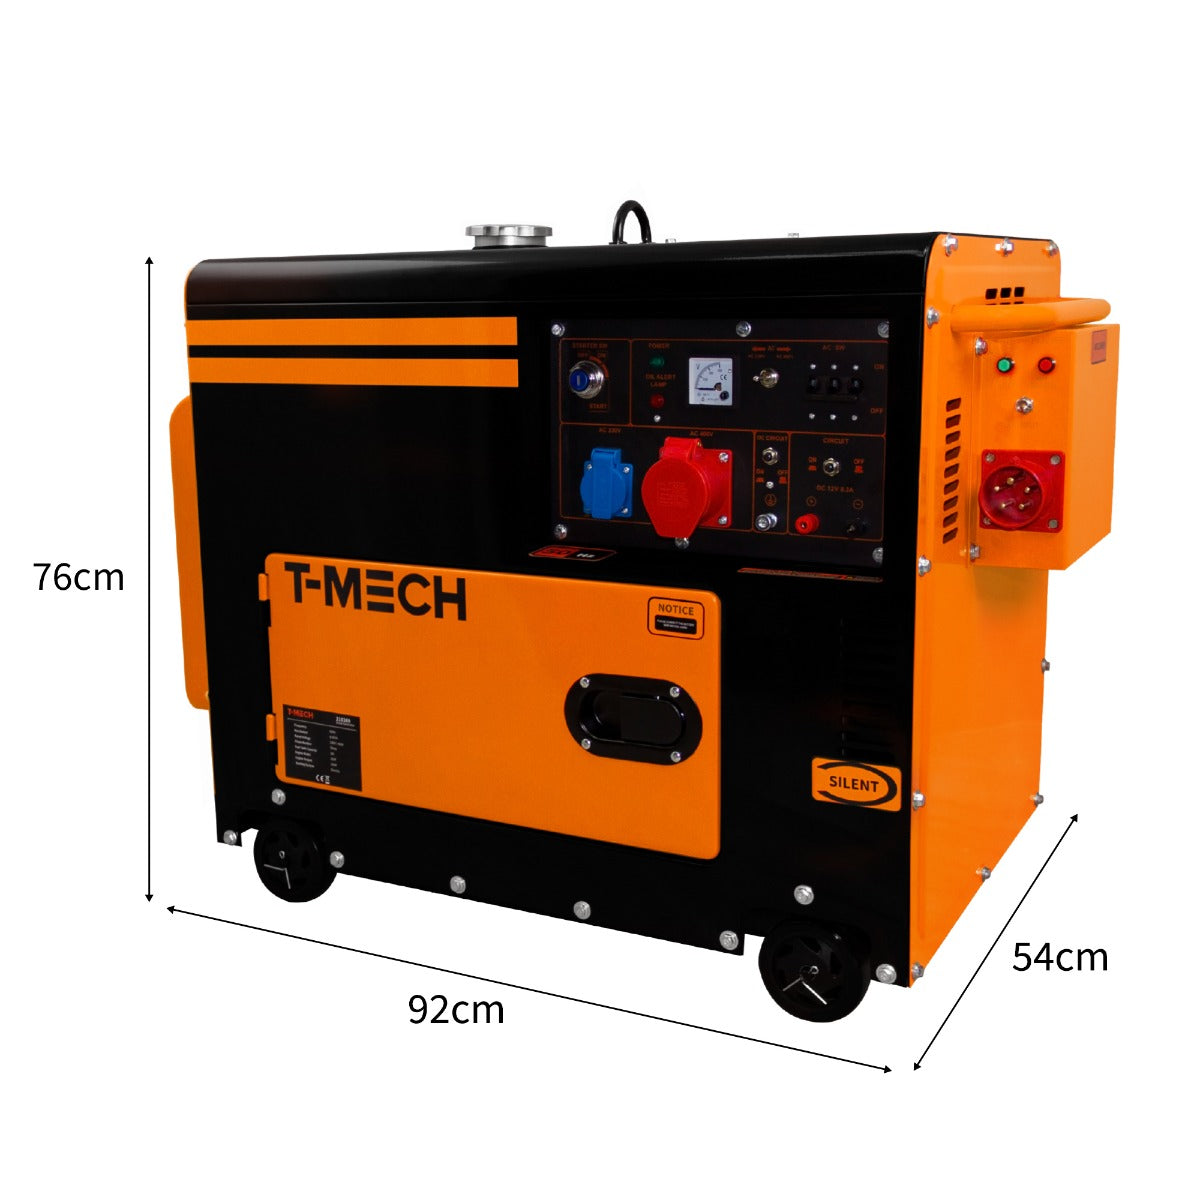 T-Mech generatore diesel portatile silenzioso trifase 400V